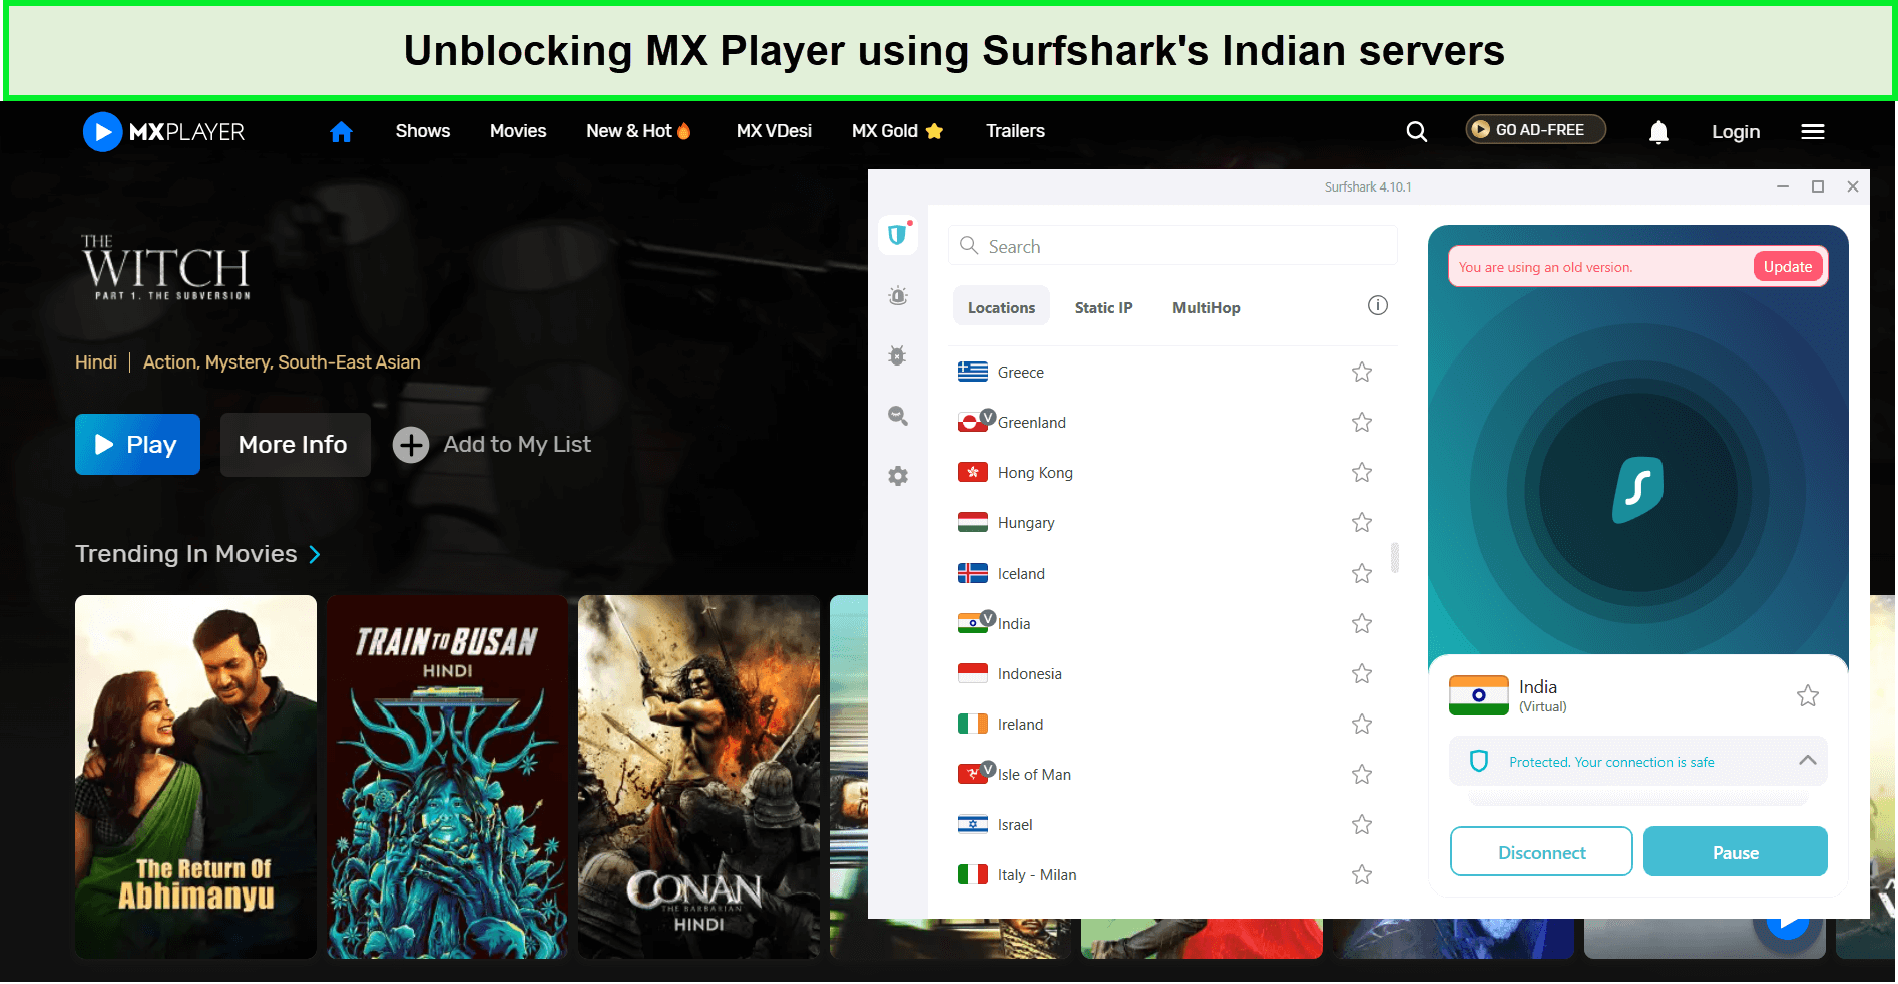 mx-player-in-Singapore-unblocked-surfshark